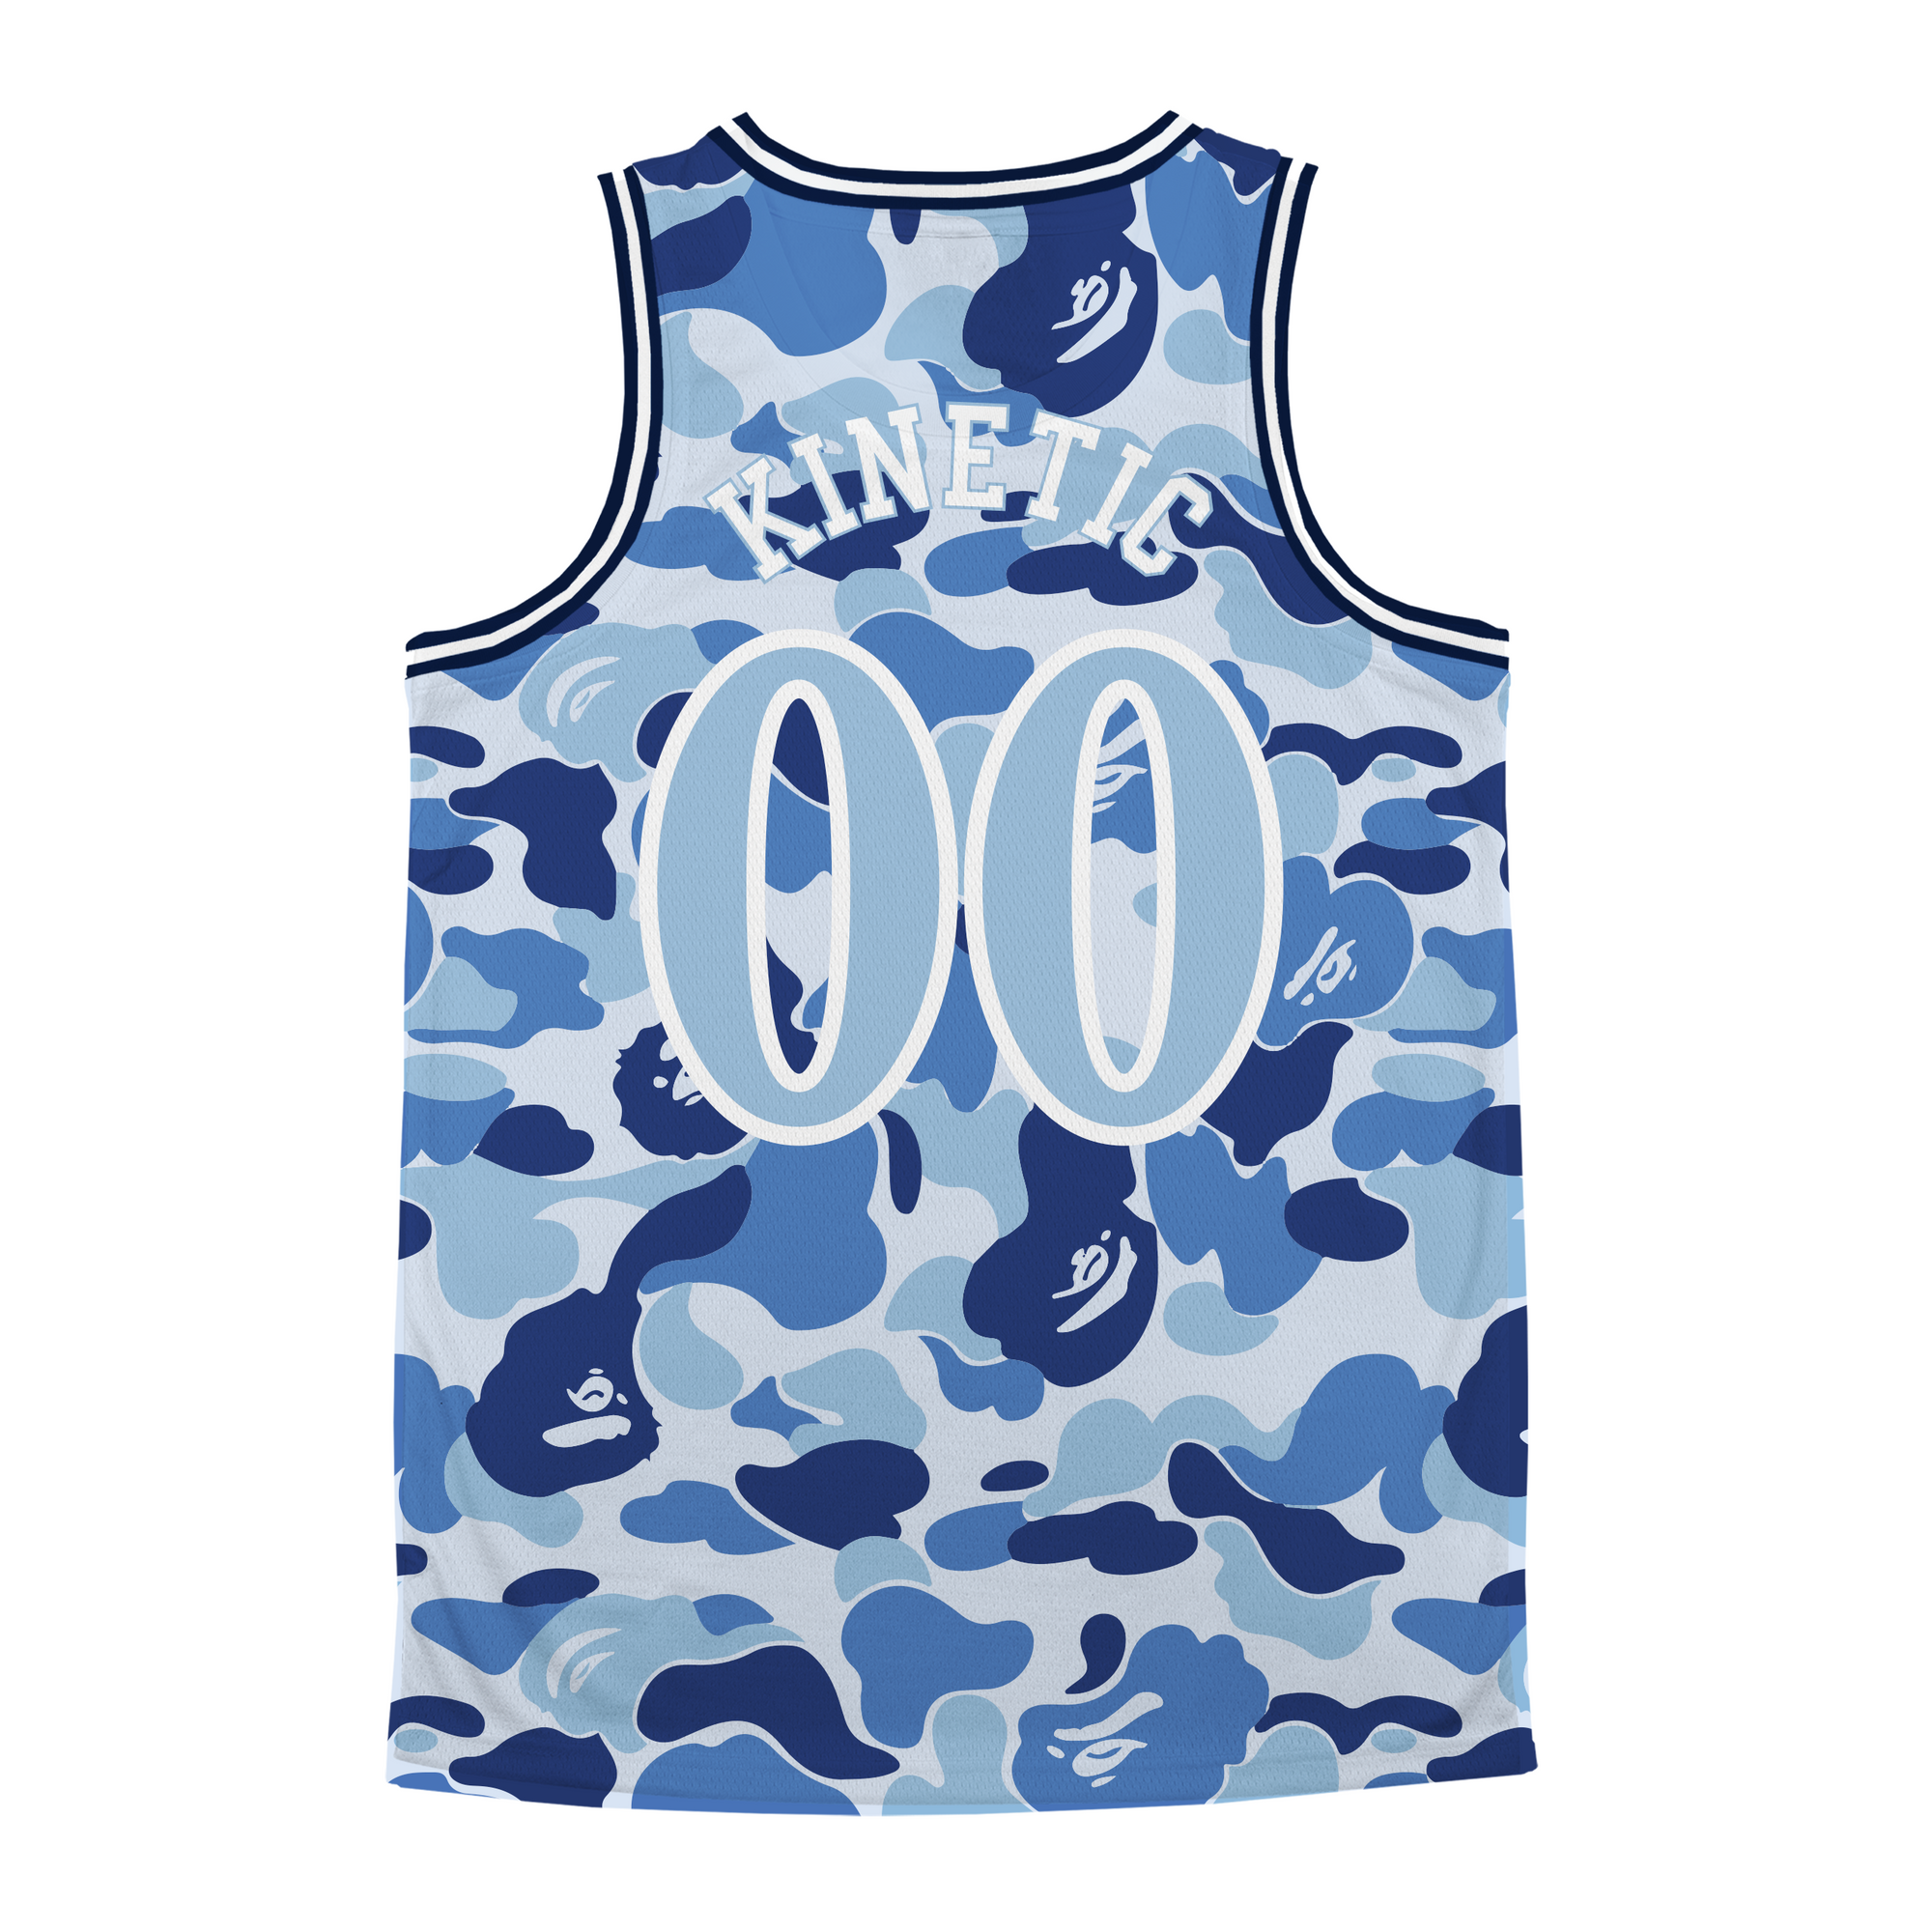 Psi Upsilon - Blue Camo Basketball Jersey